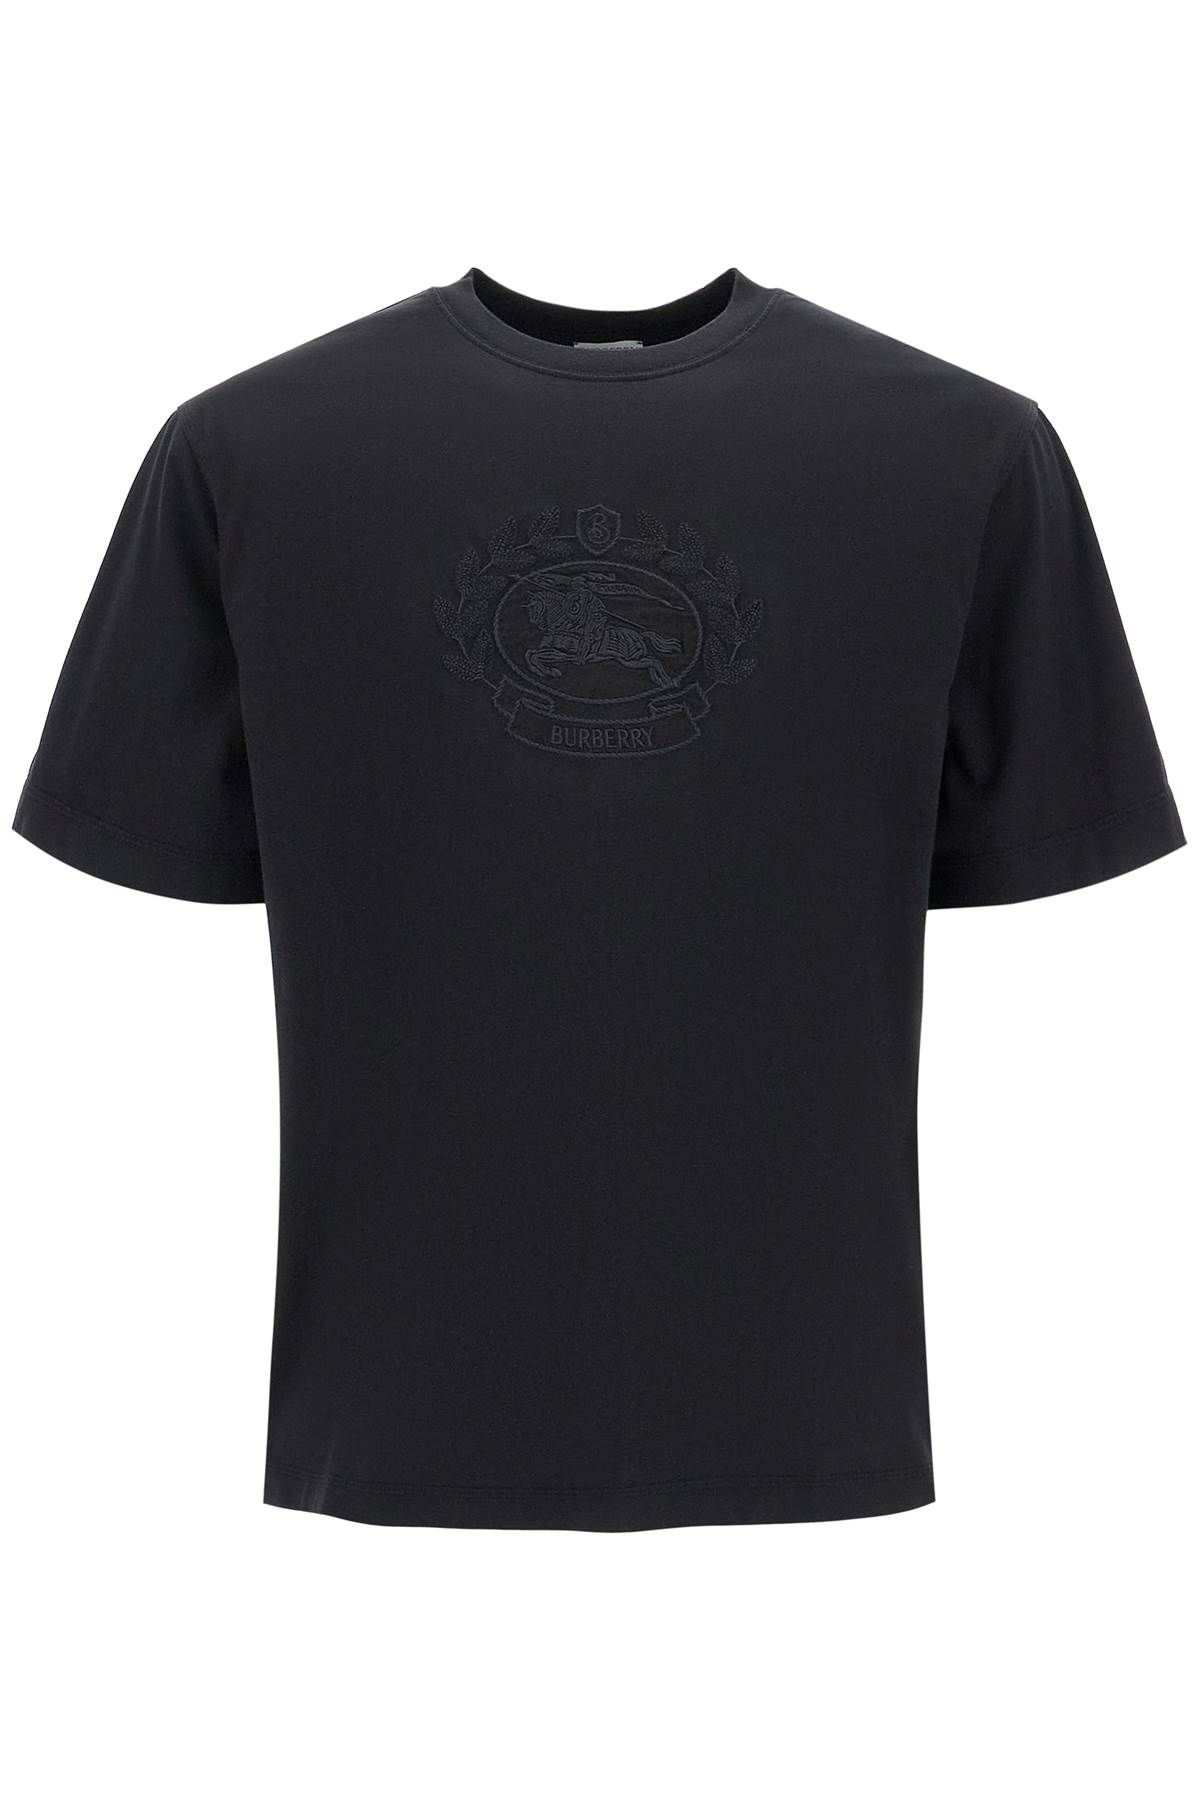 Burberry BURBERRY "ekd emblem t-shirt